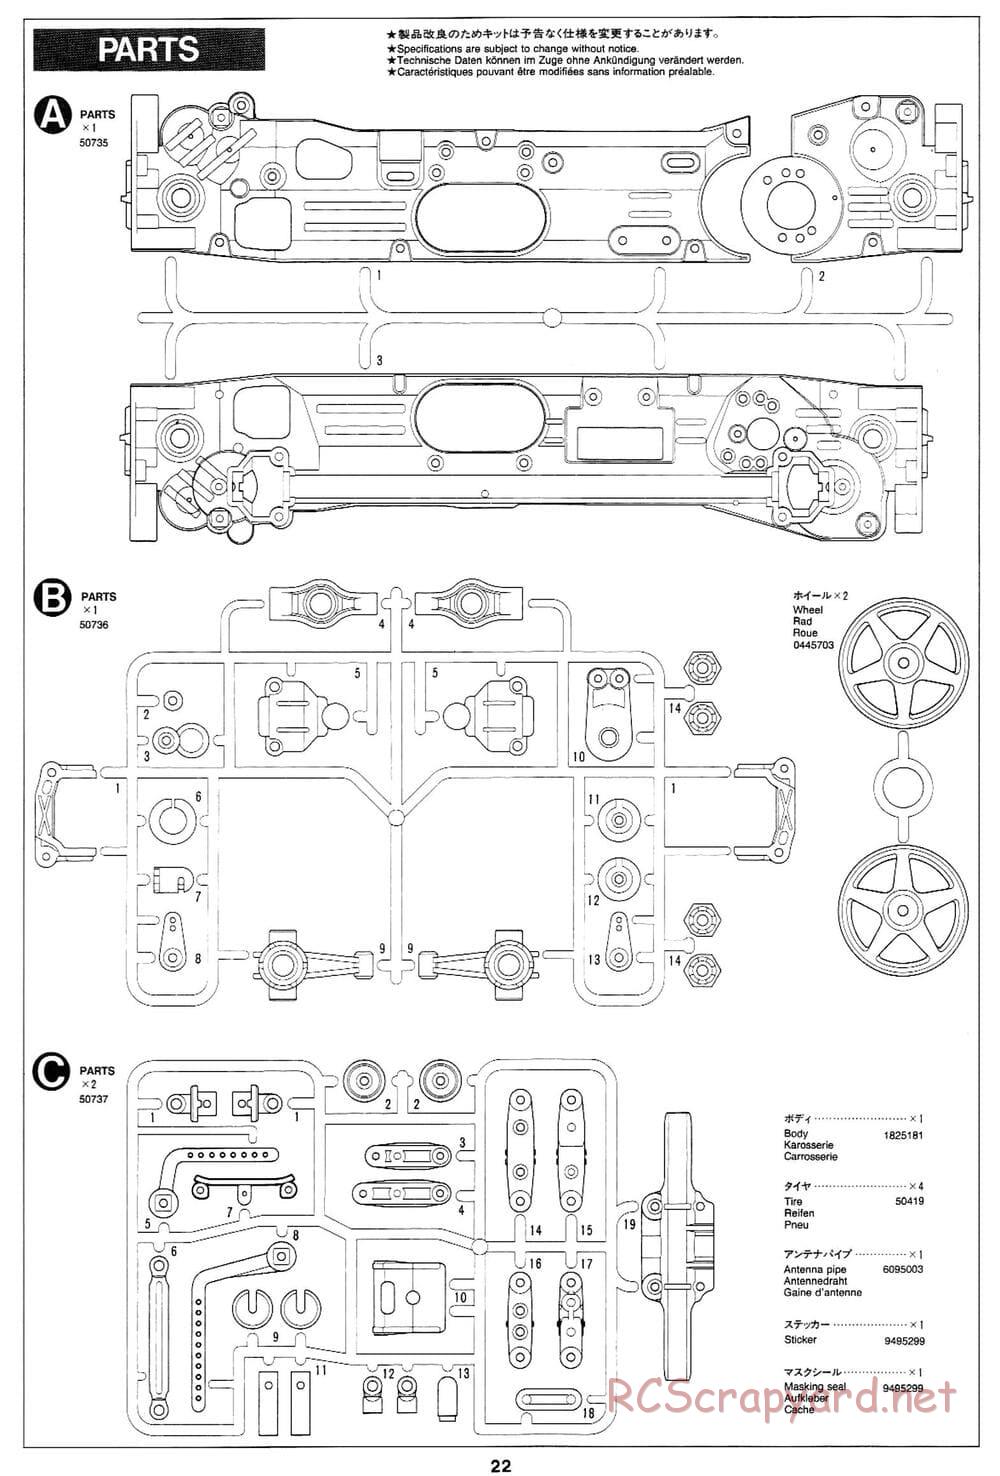 Tamiya - Ford SVT F-150 Lightning - TL-01 Chassis - Manual - Page 22